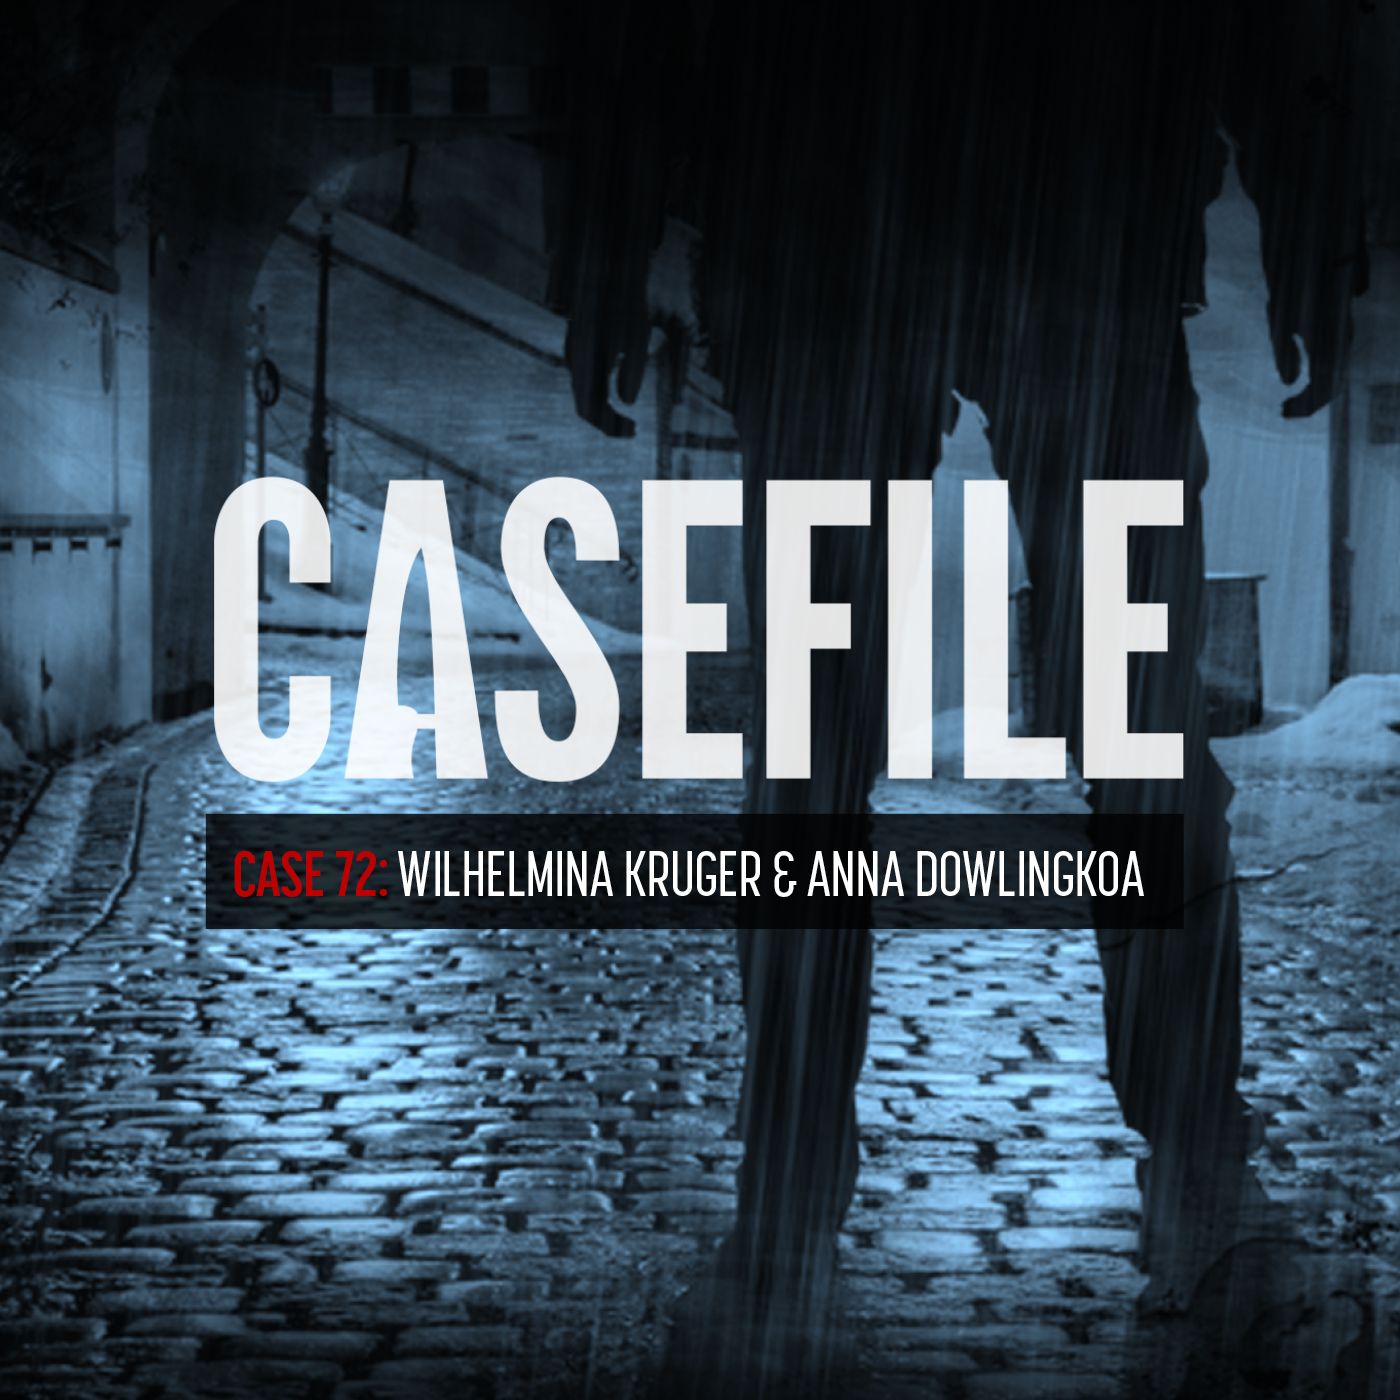 Case 72: Wilhelmina Kruger & Anna Dowlingkoa